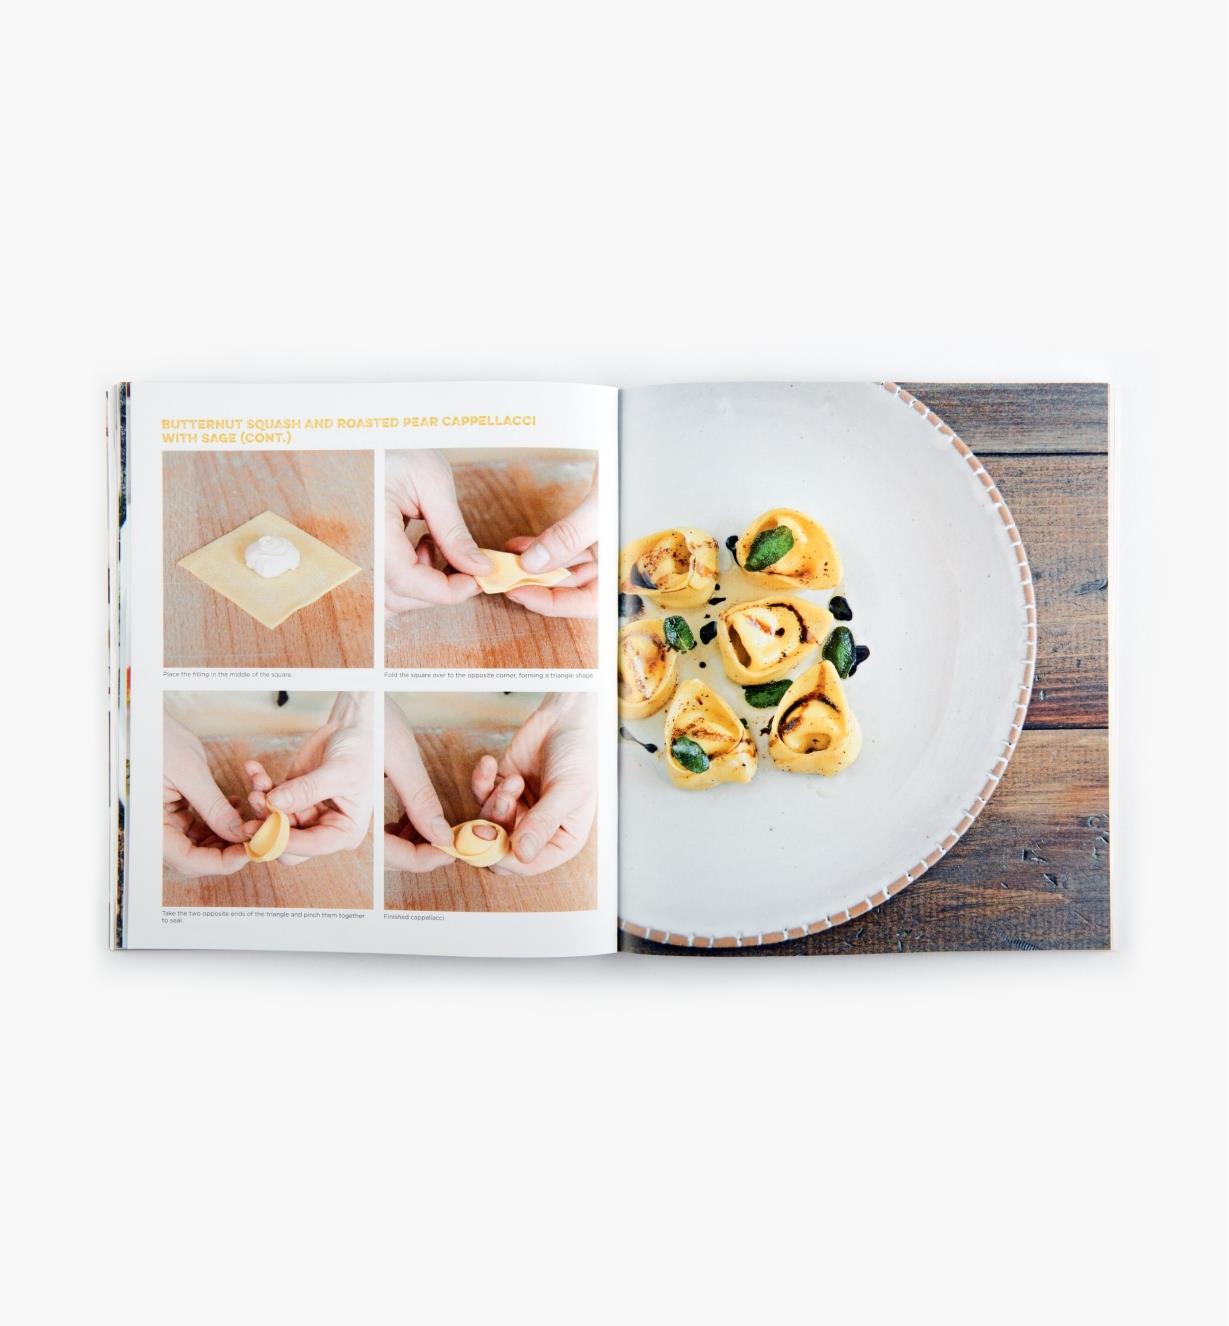 LA618 - Handmade Pasta Workshop and Cookbook